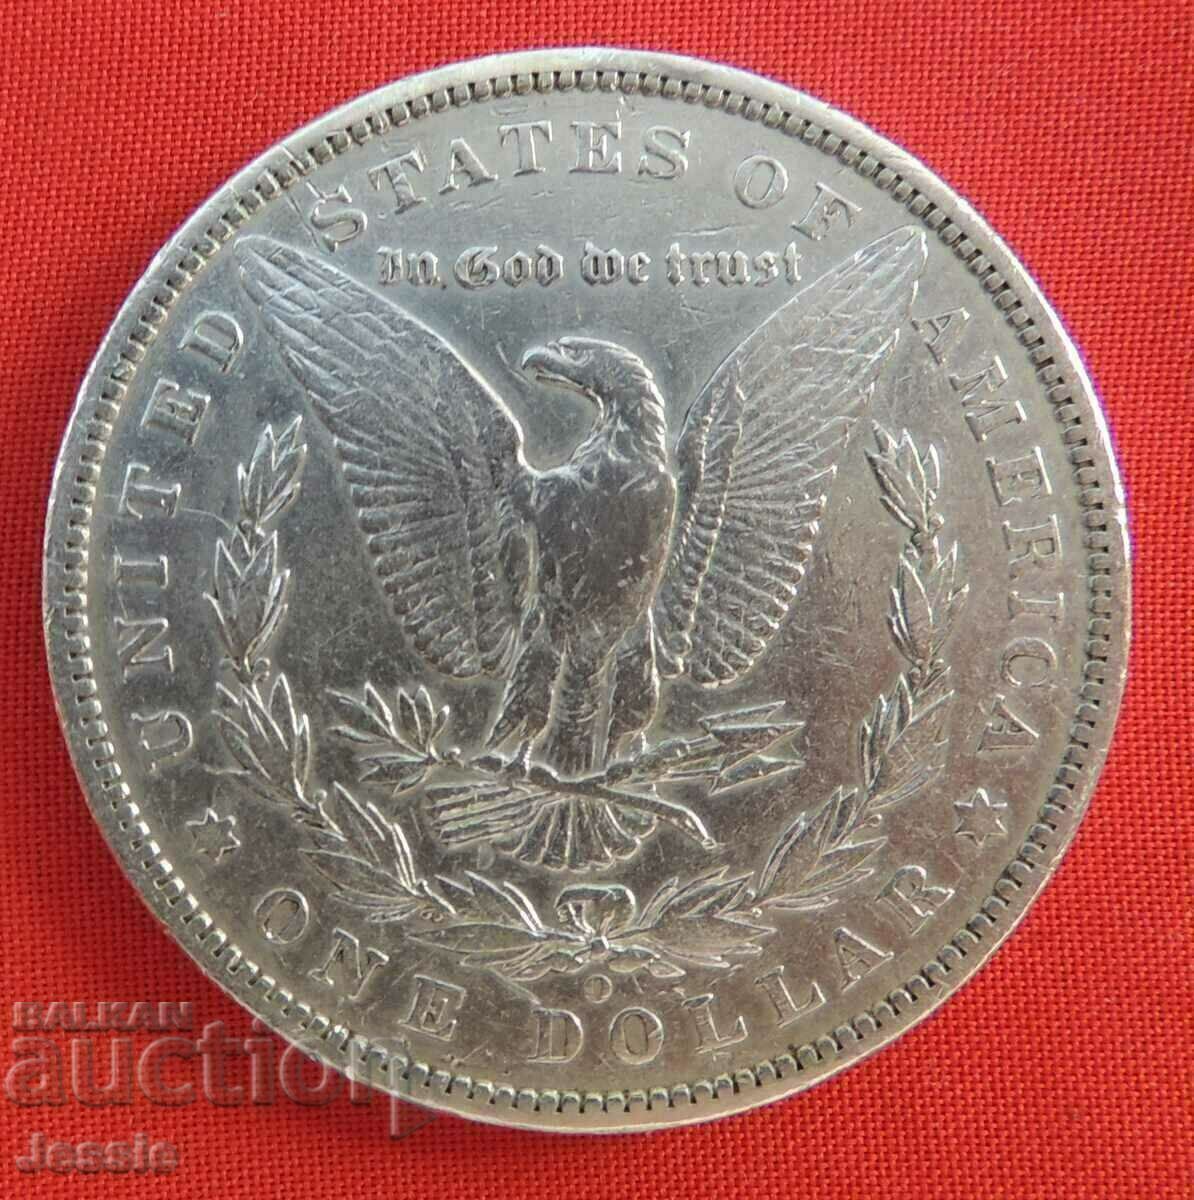 1 Долар 1897 САЩ Morgan сребро New Orleans NO MADE IN CHINA